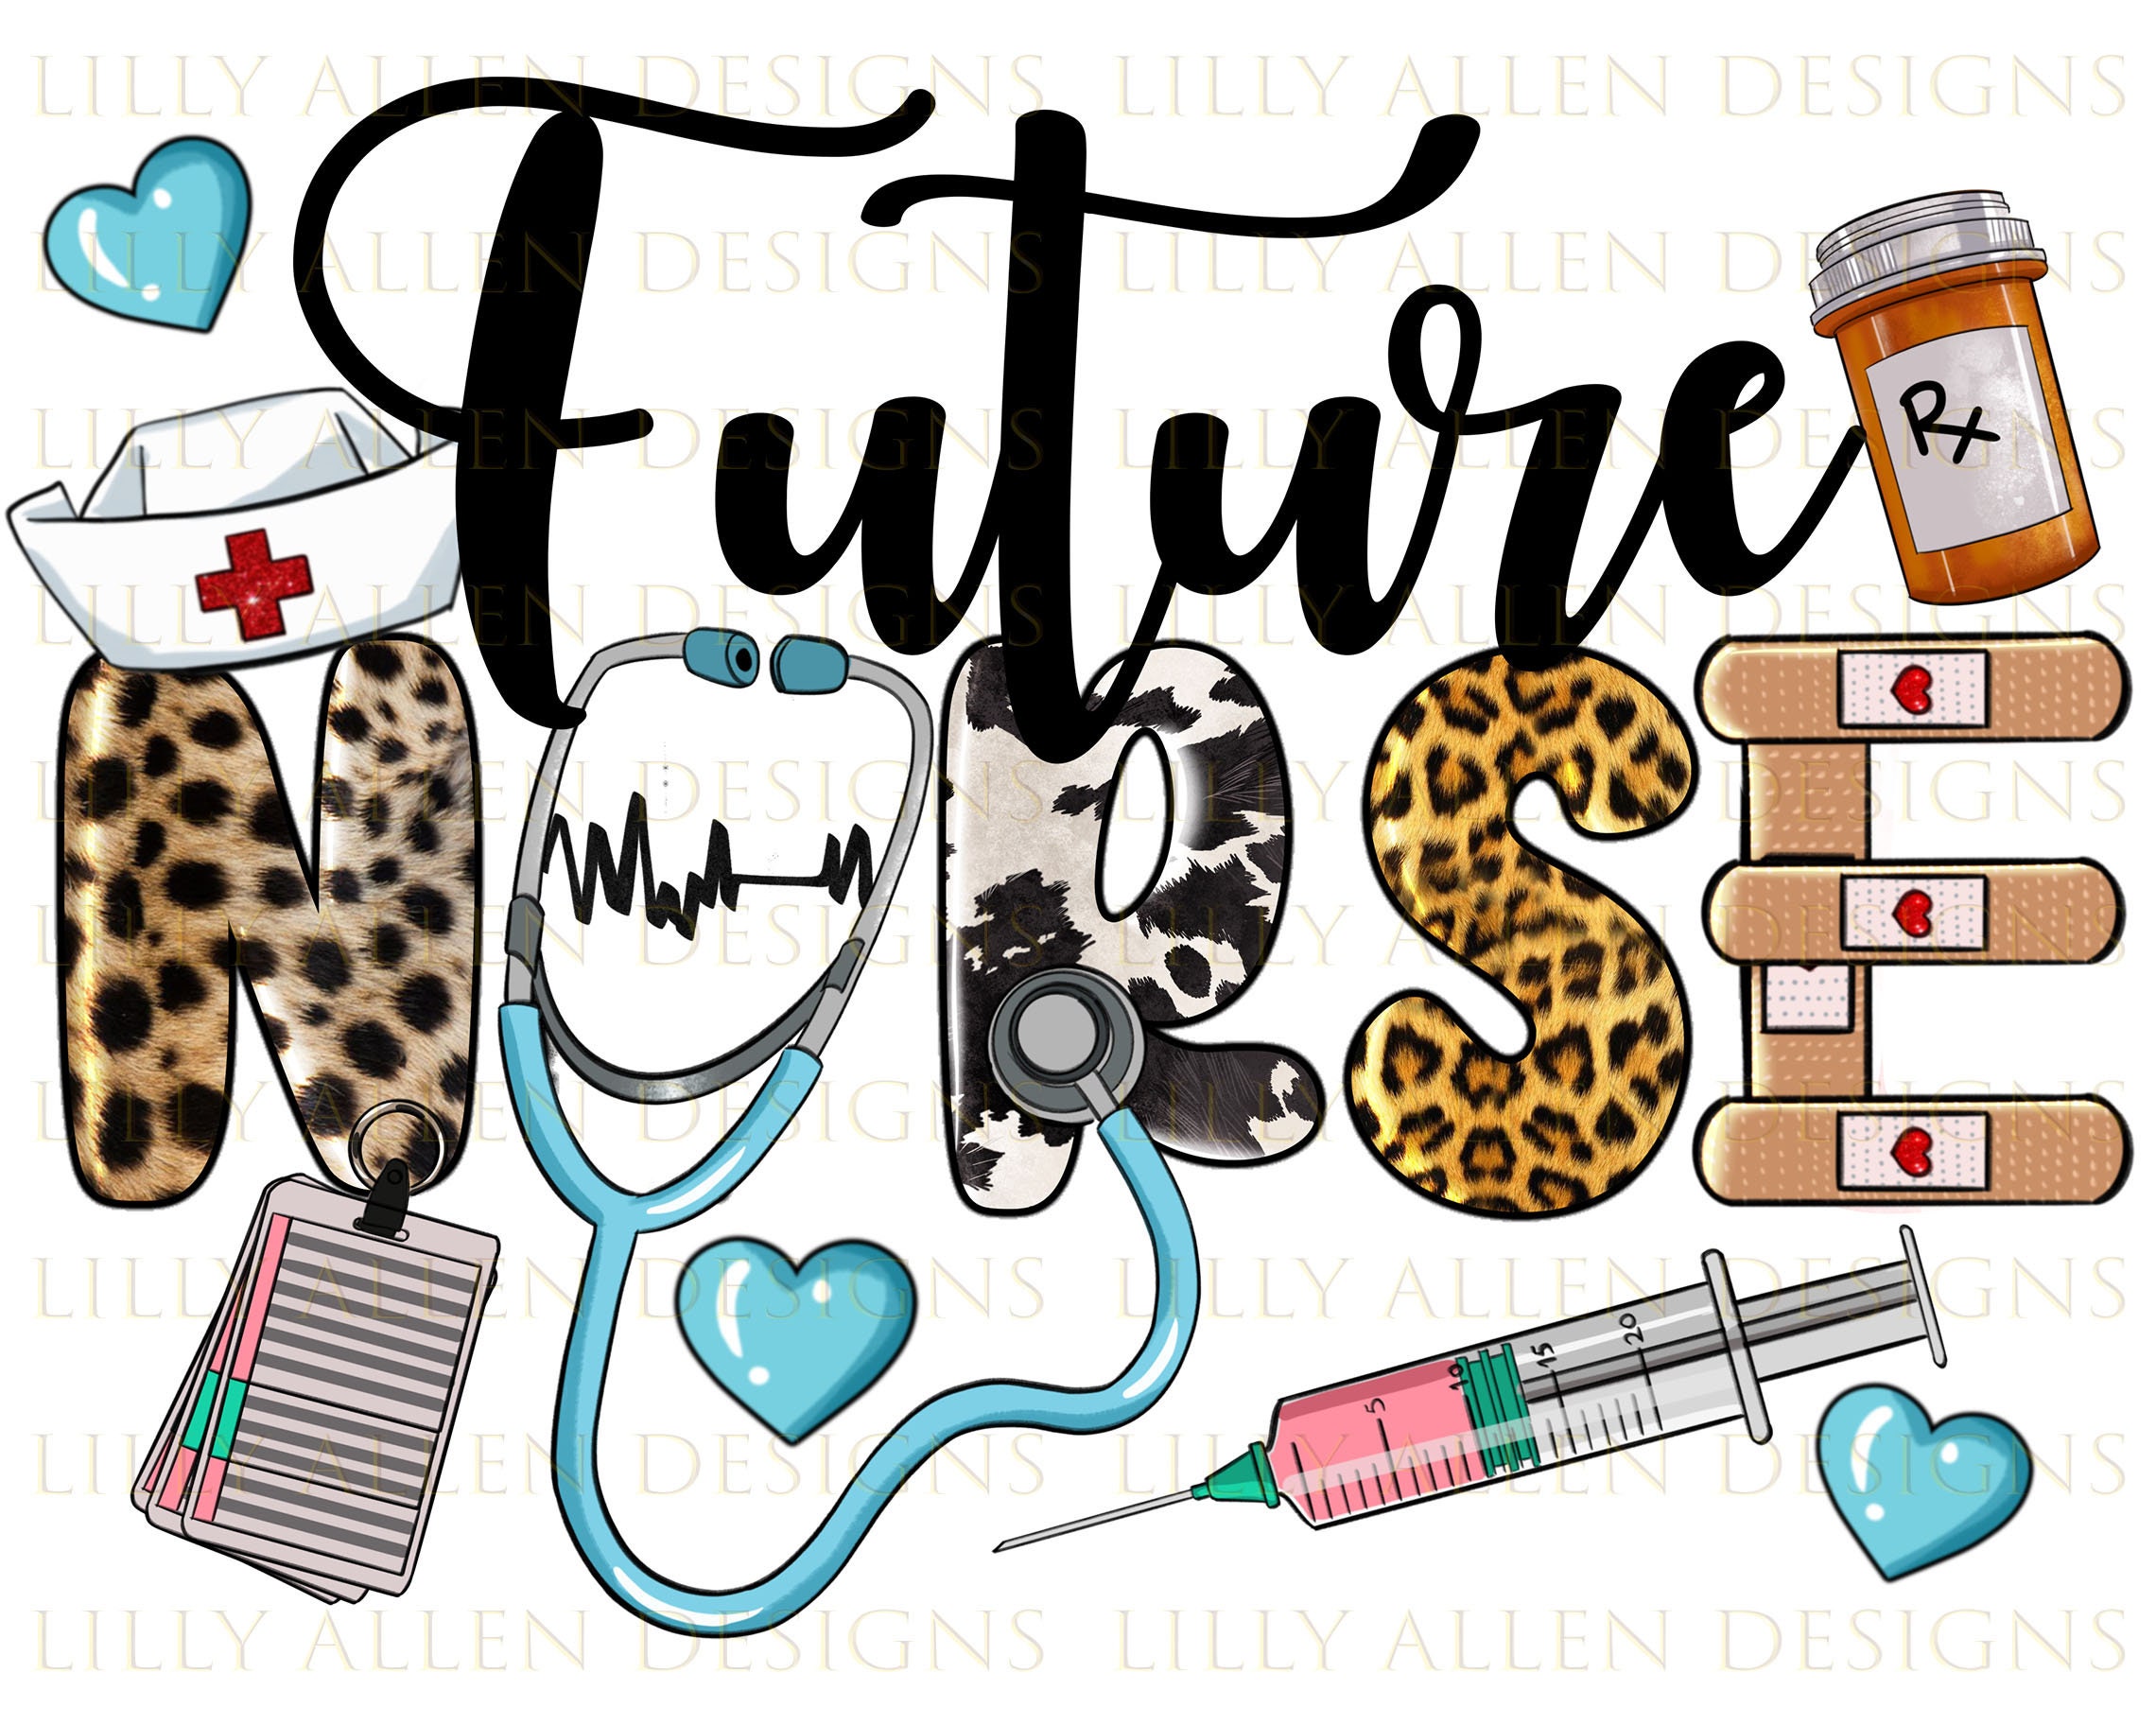 Future Nurse – Hey, Let's Make Stuff